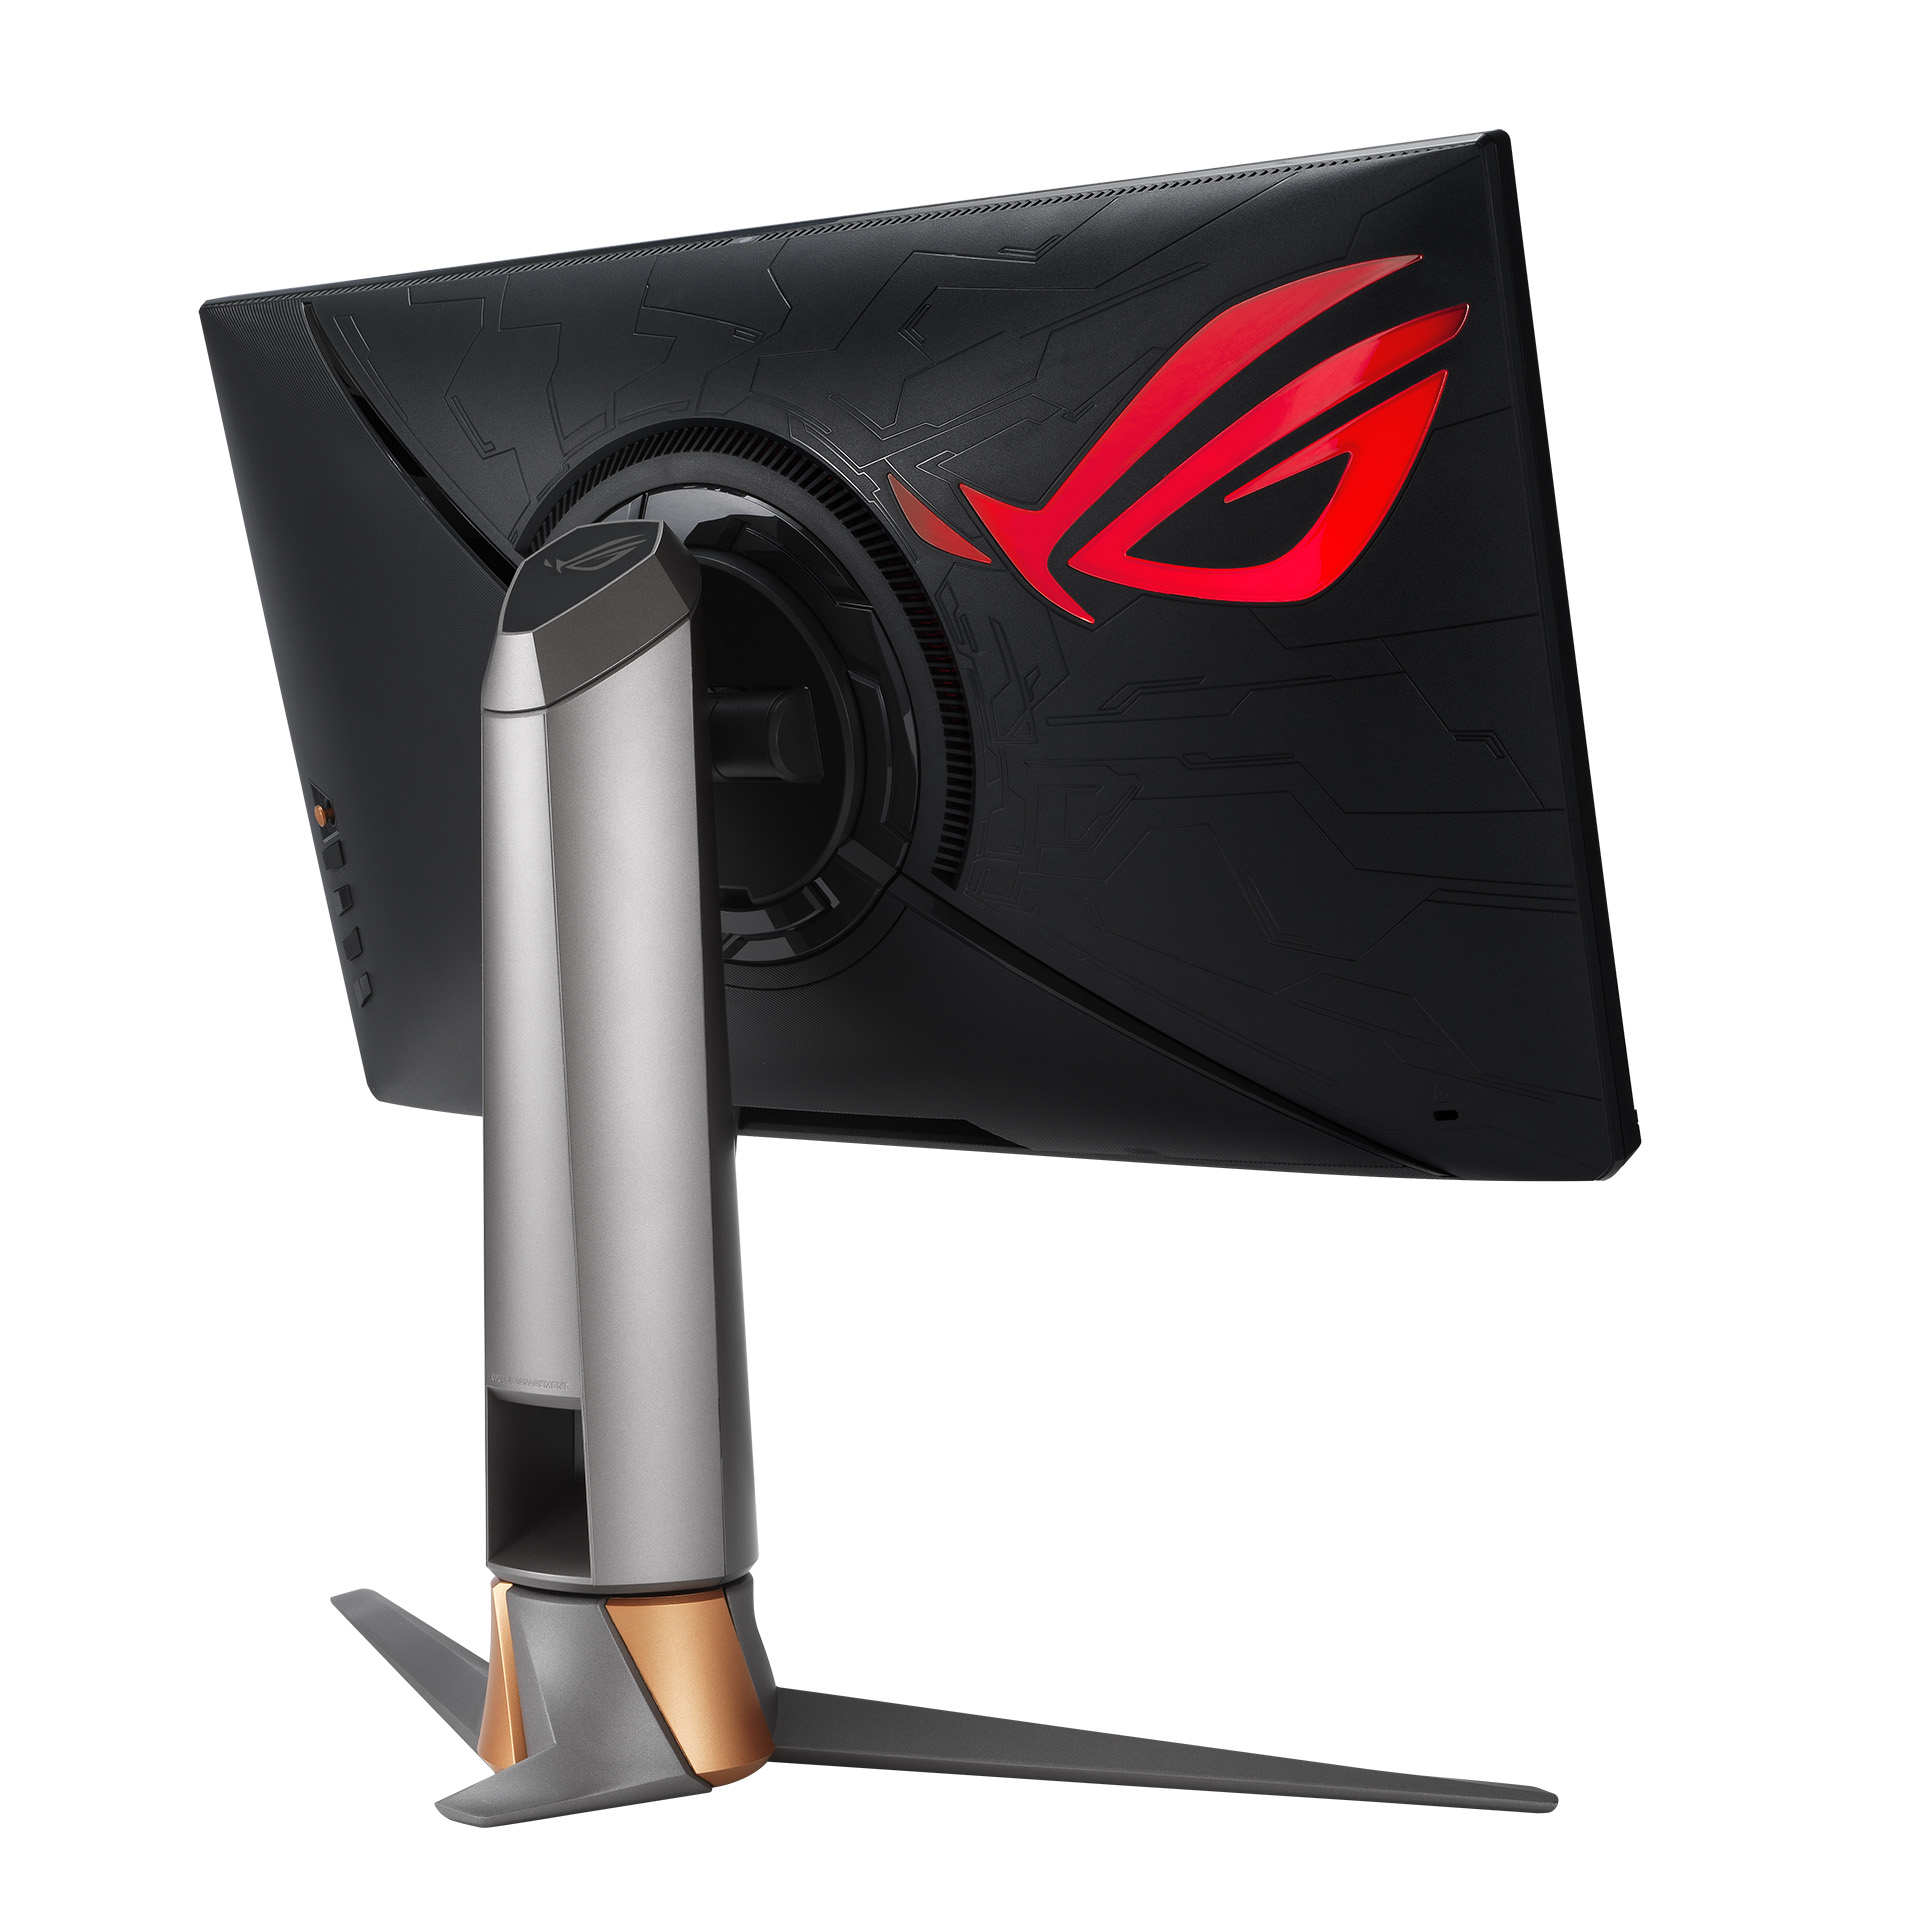 ASUS ROG Swift PG259QN 360 Hz Gaming Monitor Releasing in September for $699